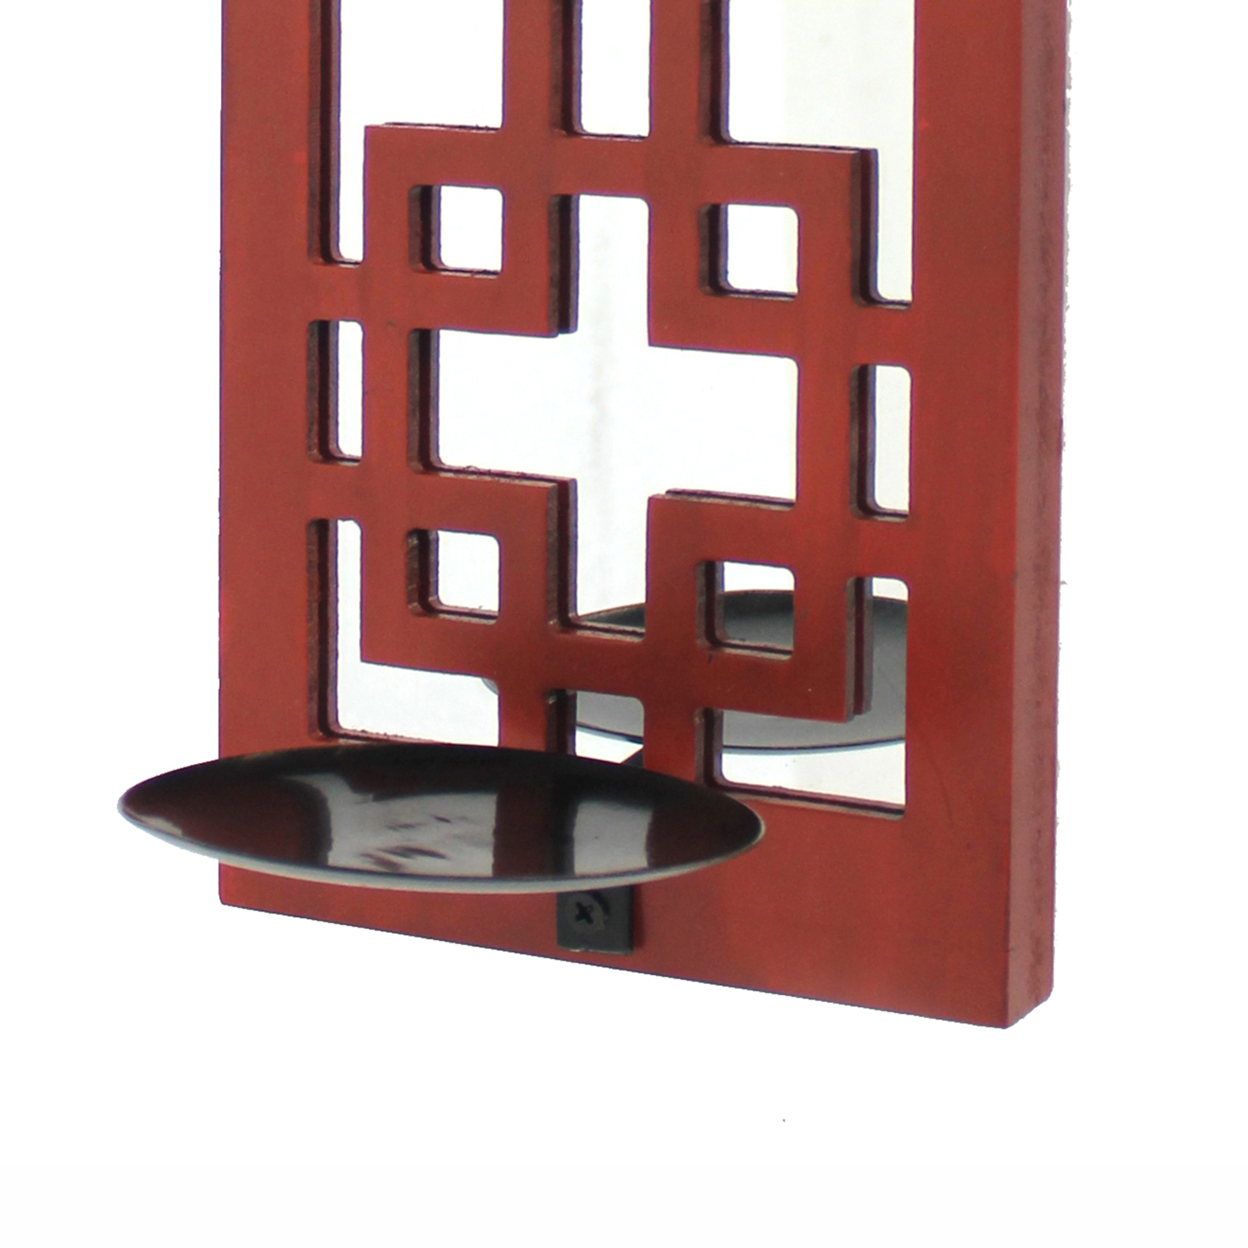 Lattice Design Wooden Frame Candle Holder With Mirror Insert, Red- Saltoro Sherpi